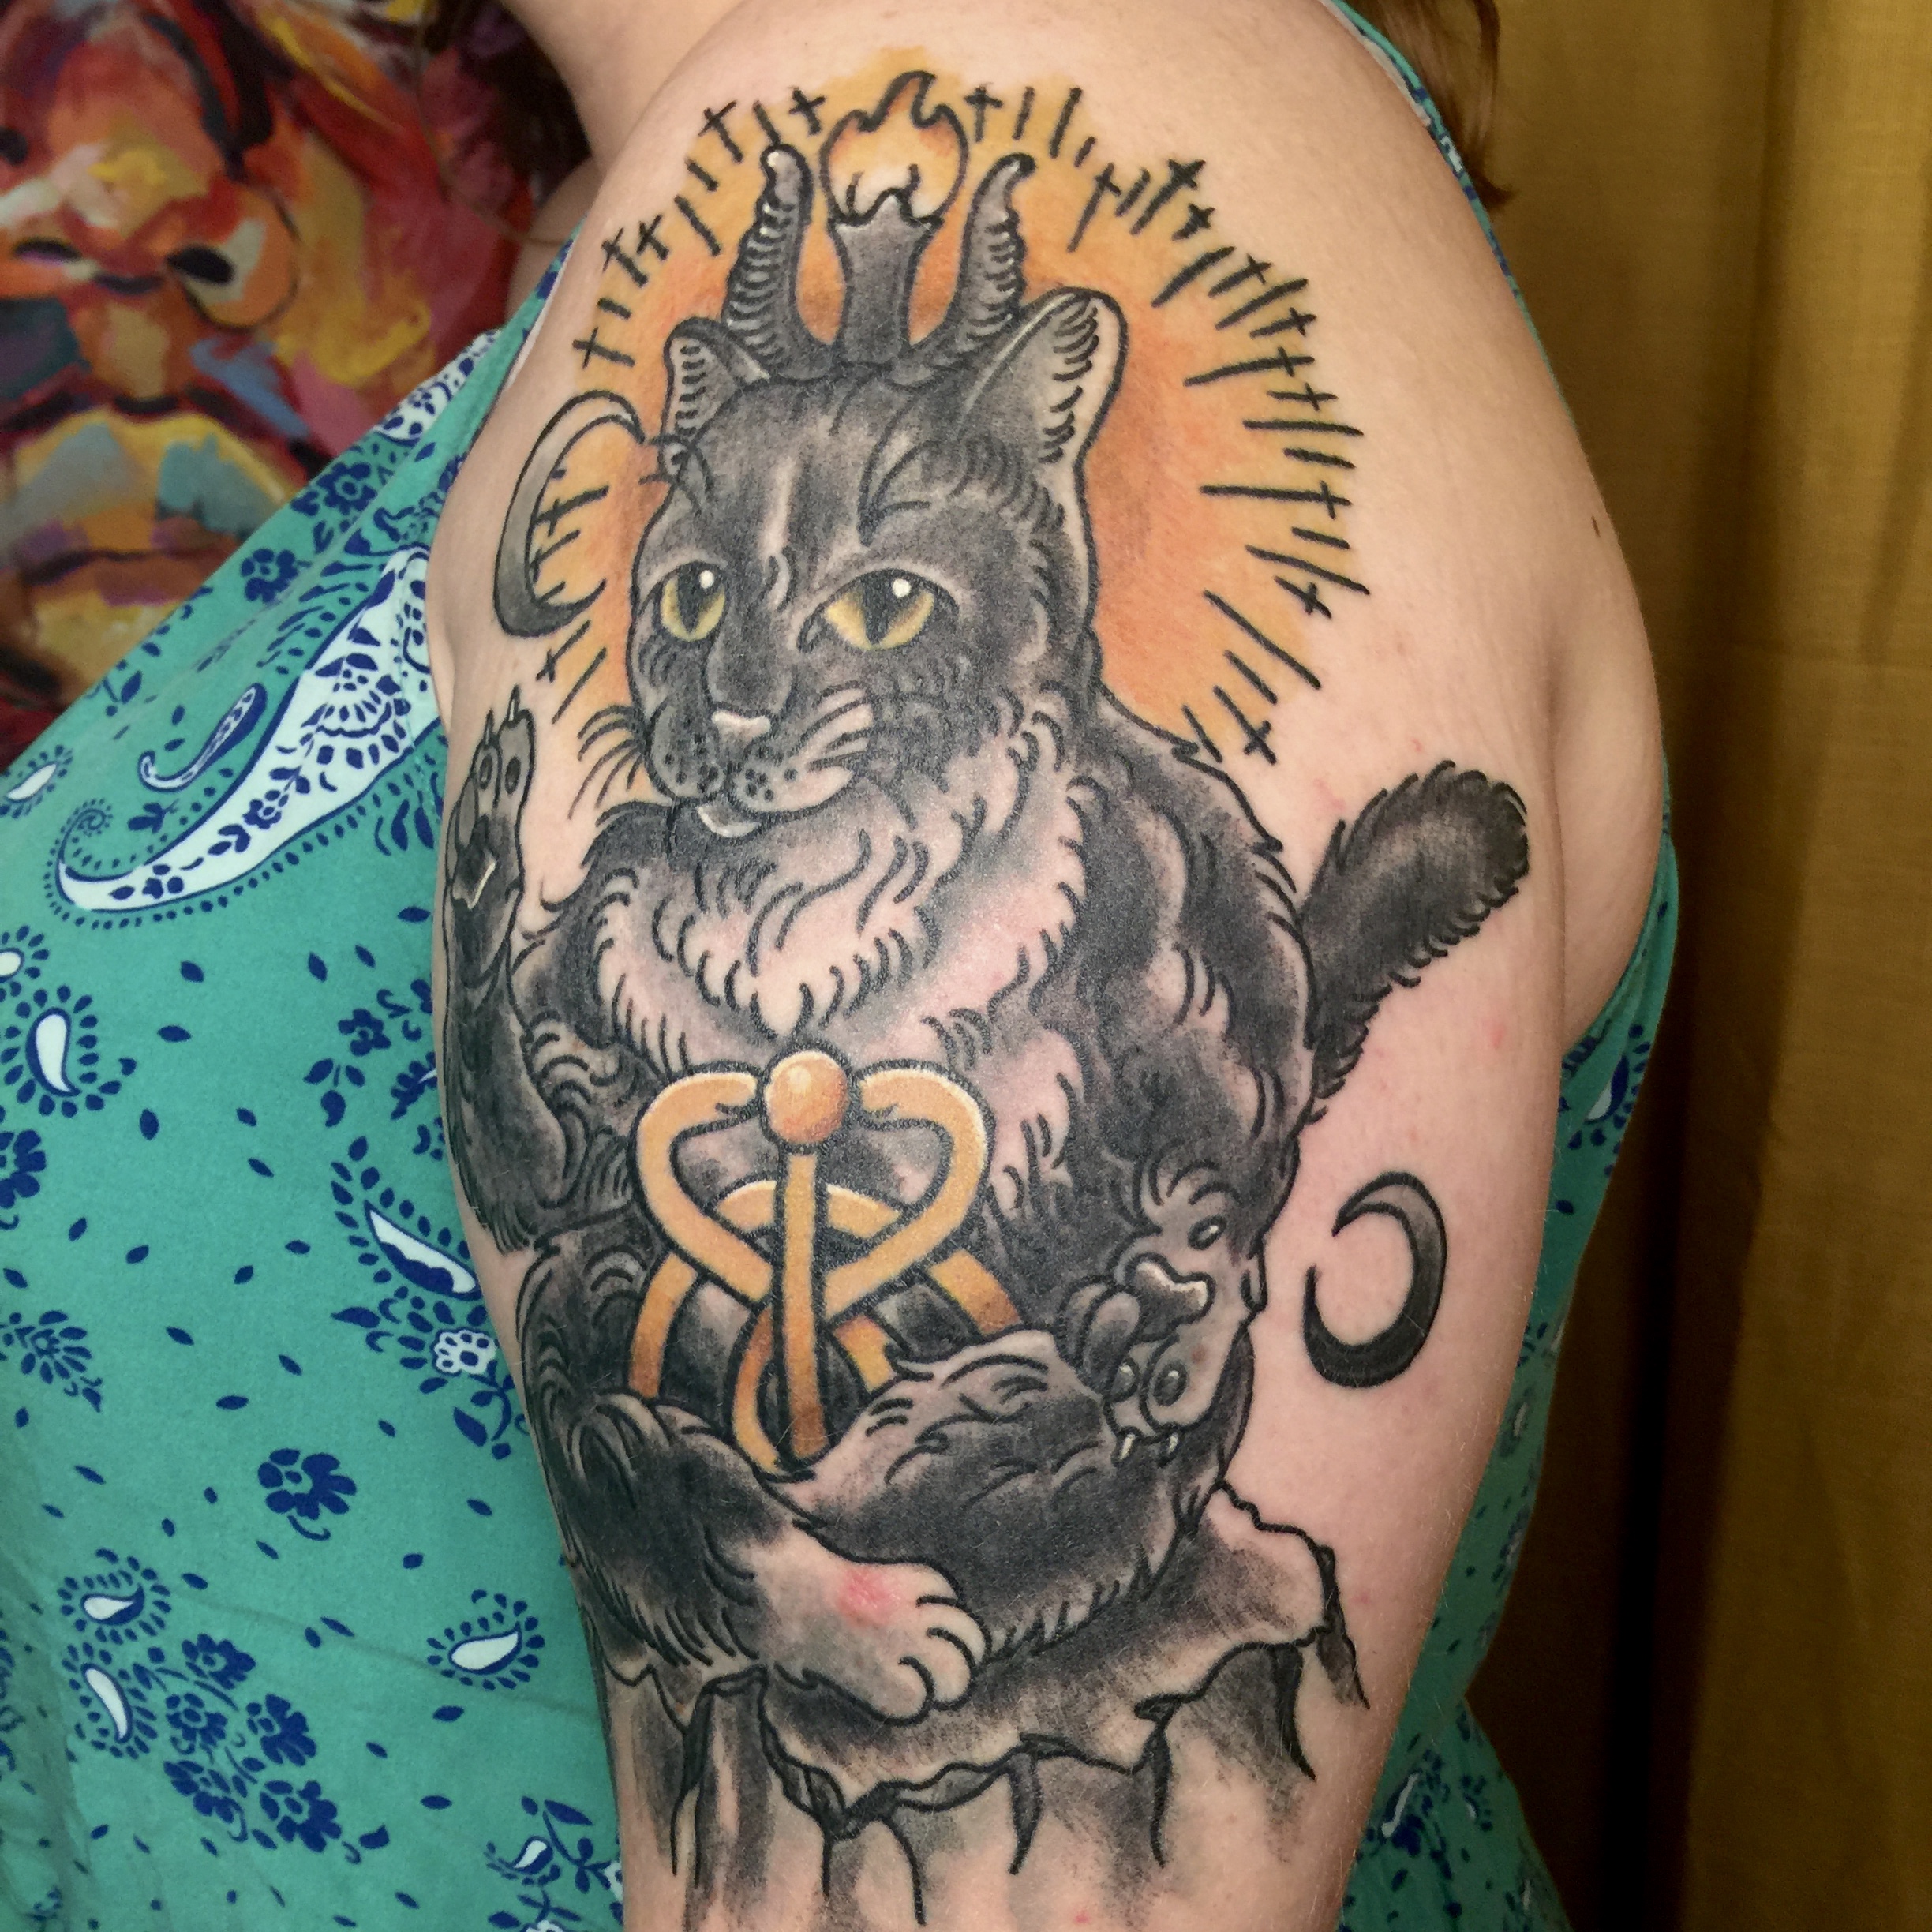 A tattoo of Baphomet as a cat